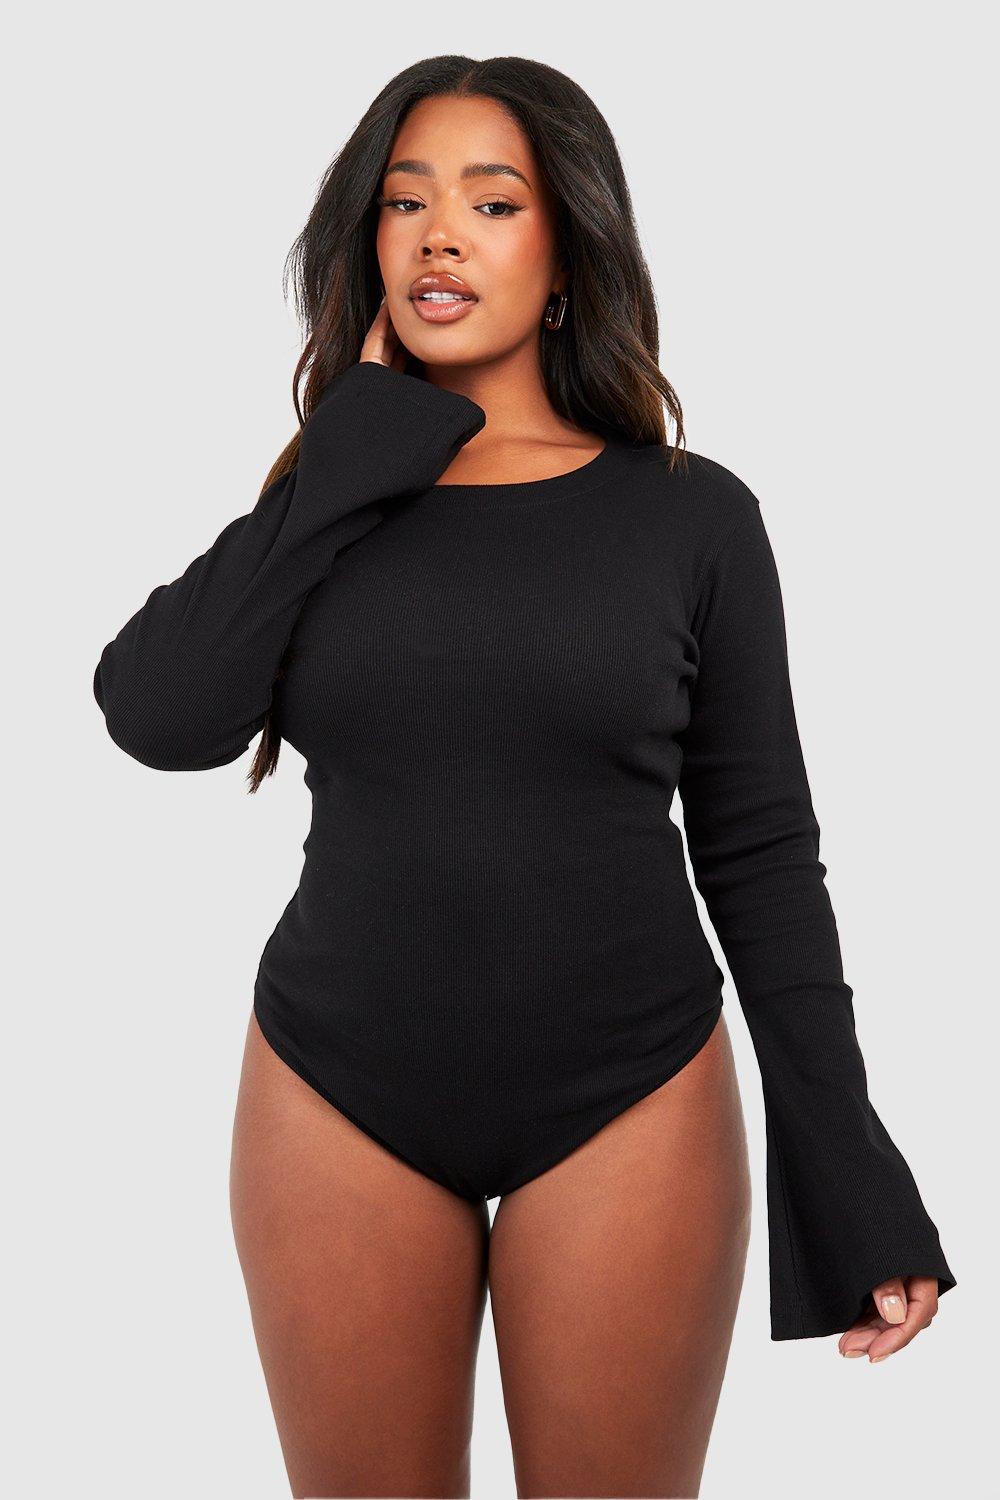 https://media.boohoo.com/i/boohoo/gzz74698_black_xl_3/female-black-plus-flared-long-sleeve-bodysuit-